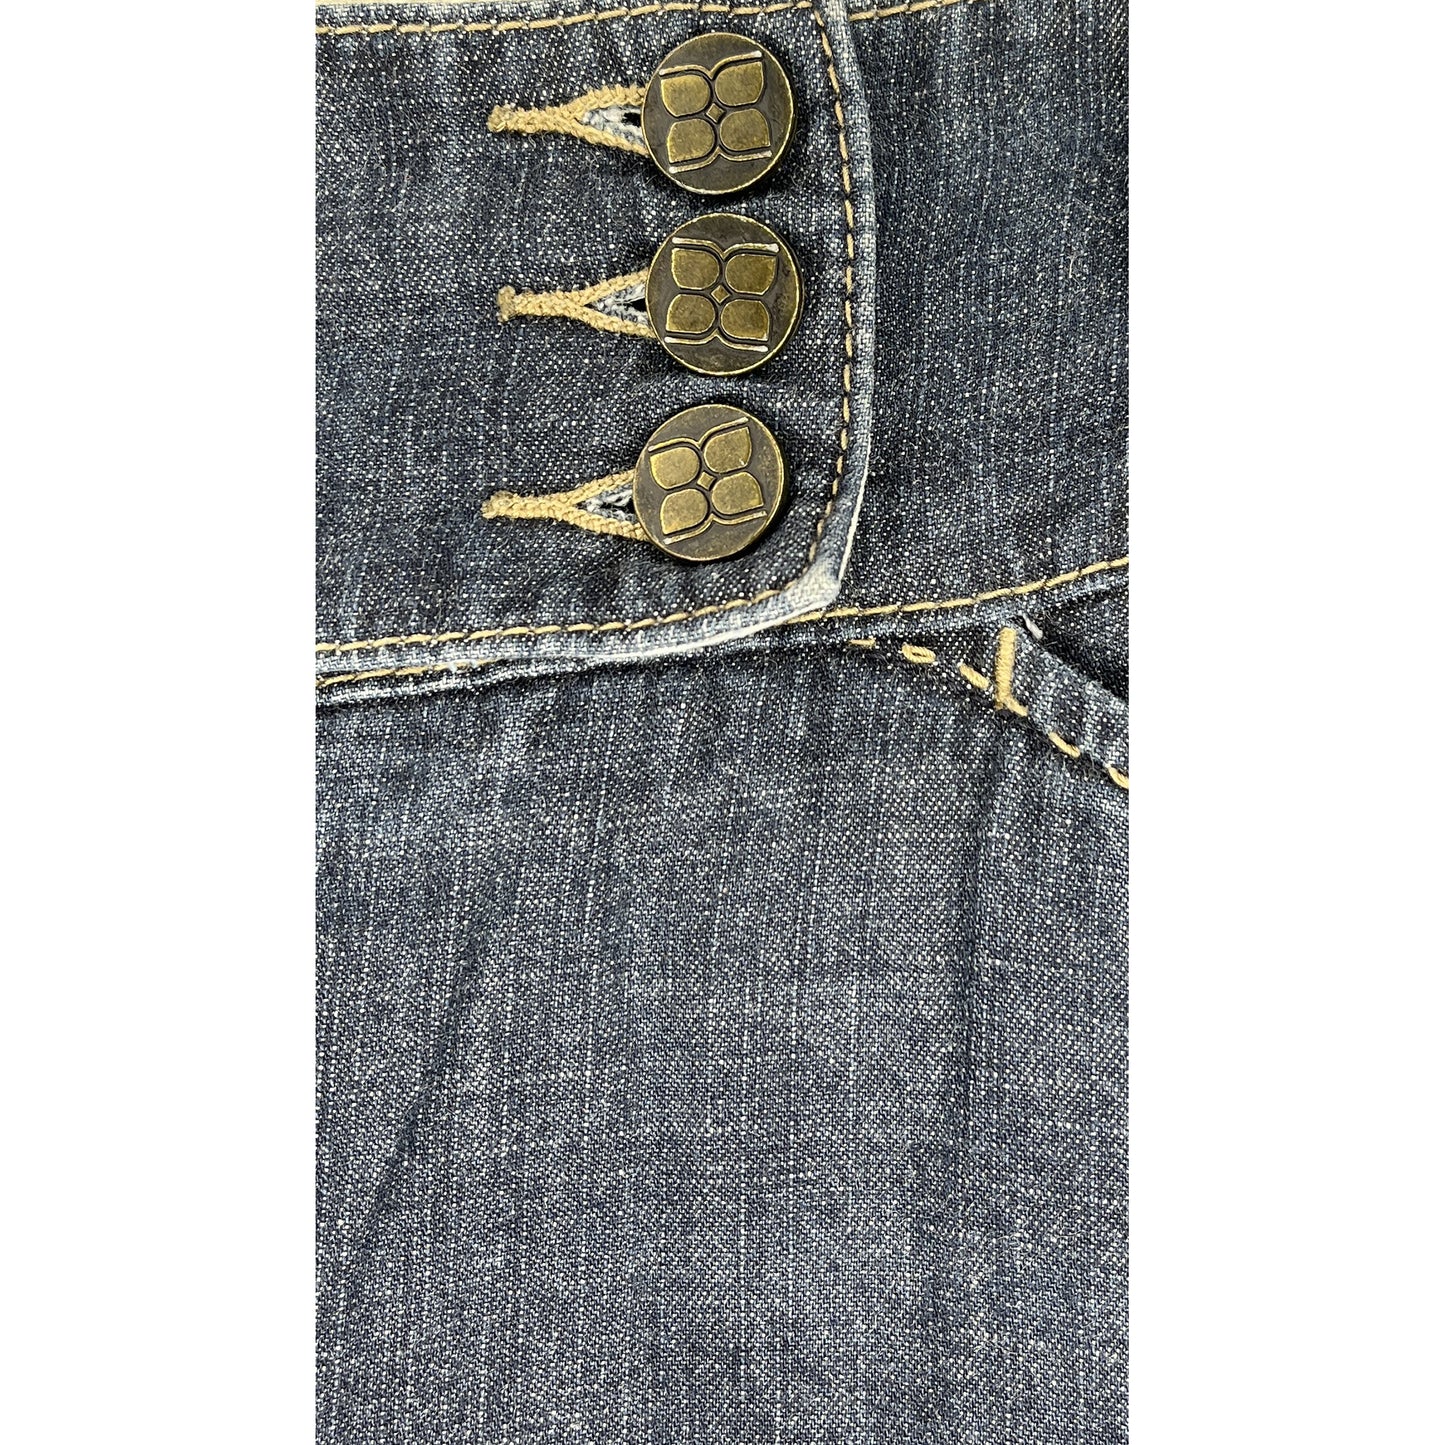 BCBG Denim Jeans Flare Dark Blue Size 30 SKU 000424-1